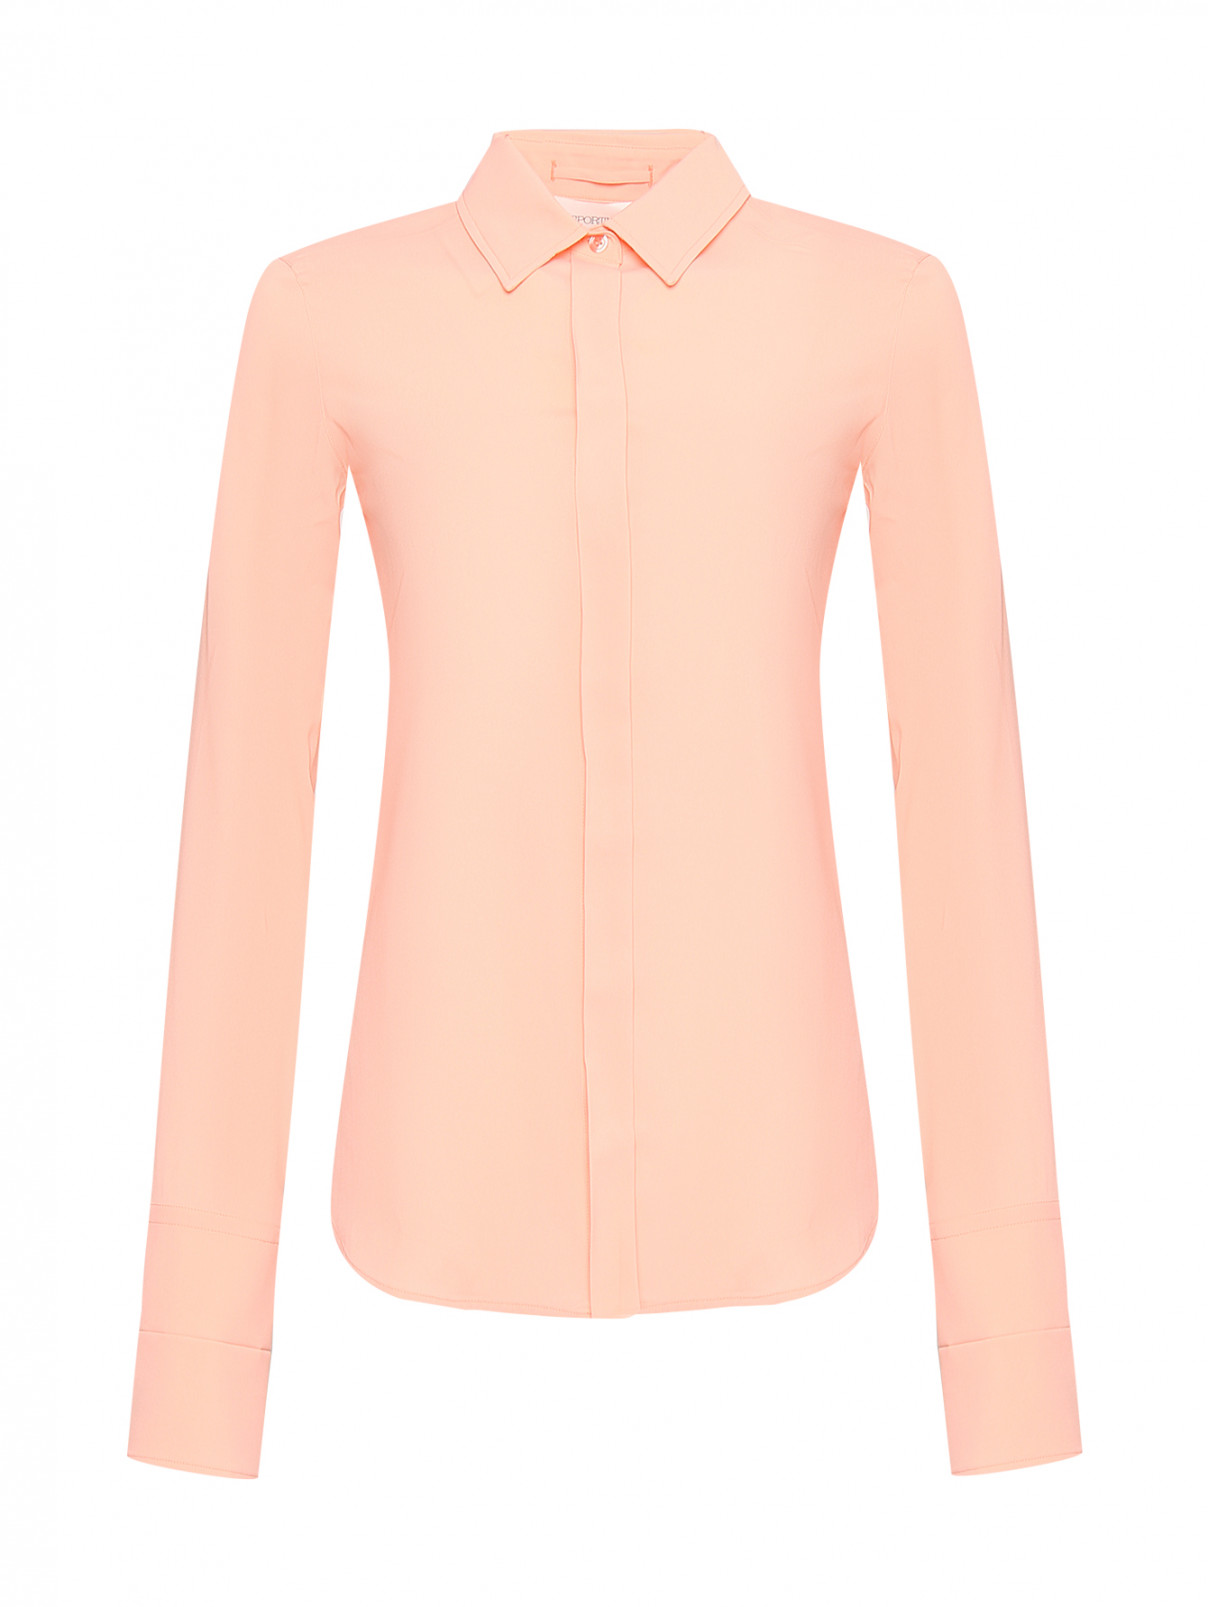 Блуза с широкими манжетами Sportmax  –  Общий вид  – Цвет:  Розовый